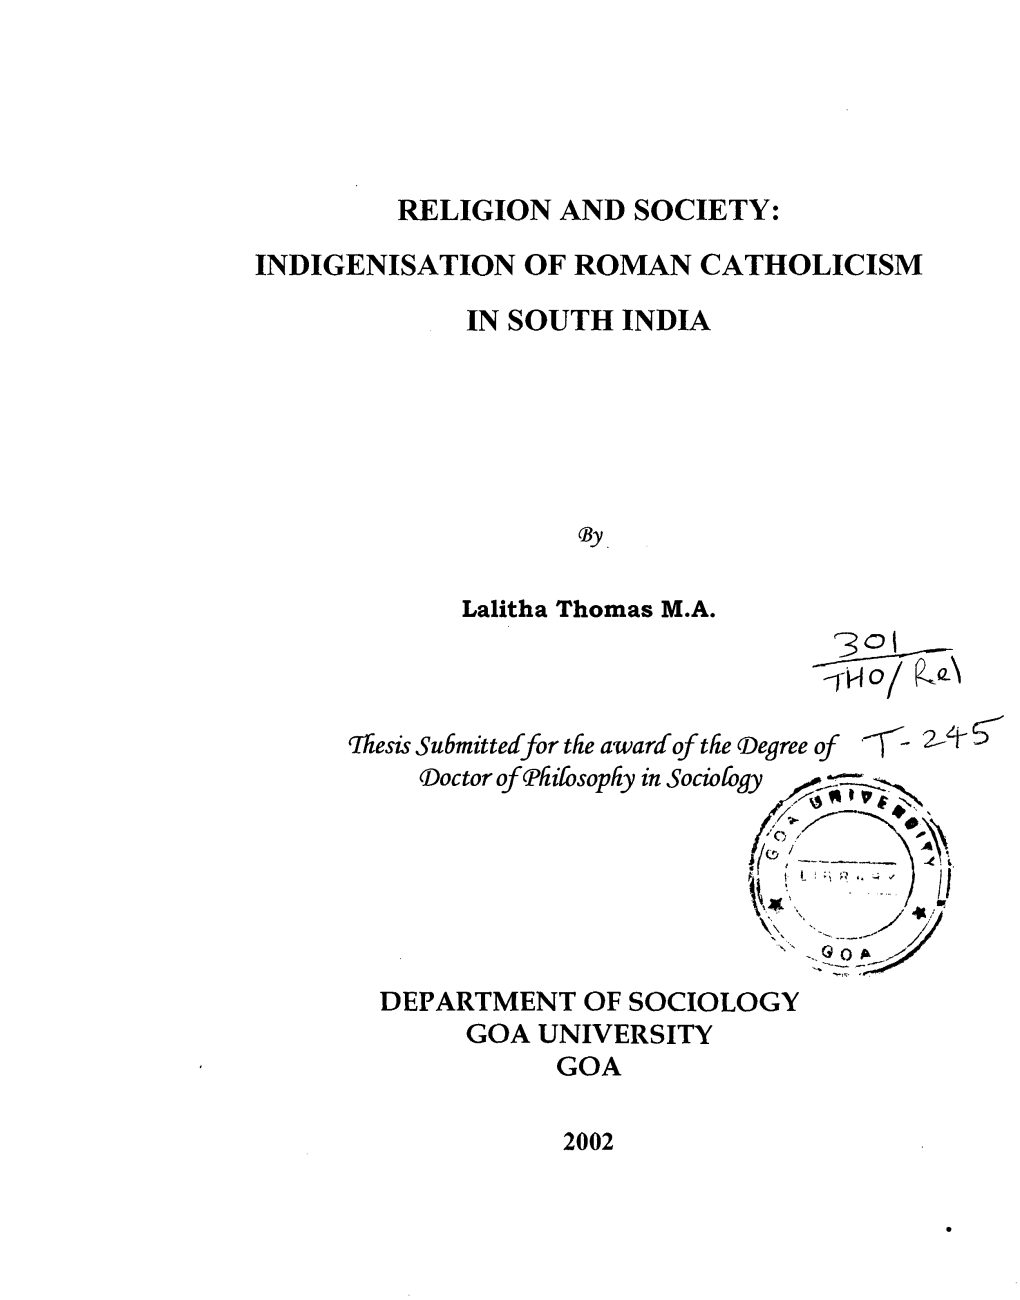 Indigenisation of Roman Catholicism in South India